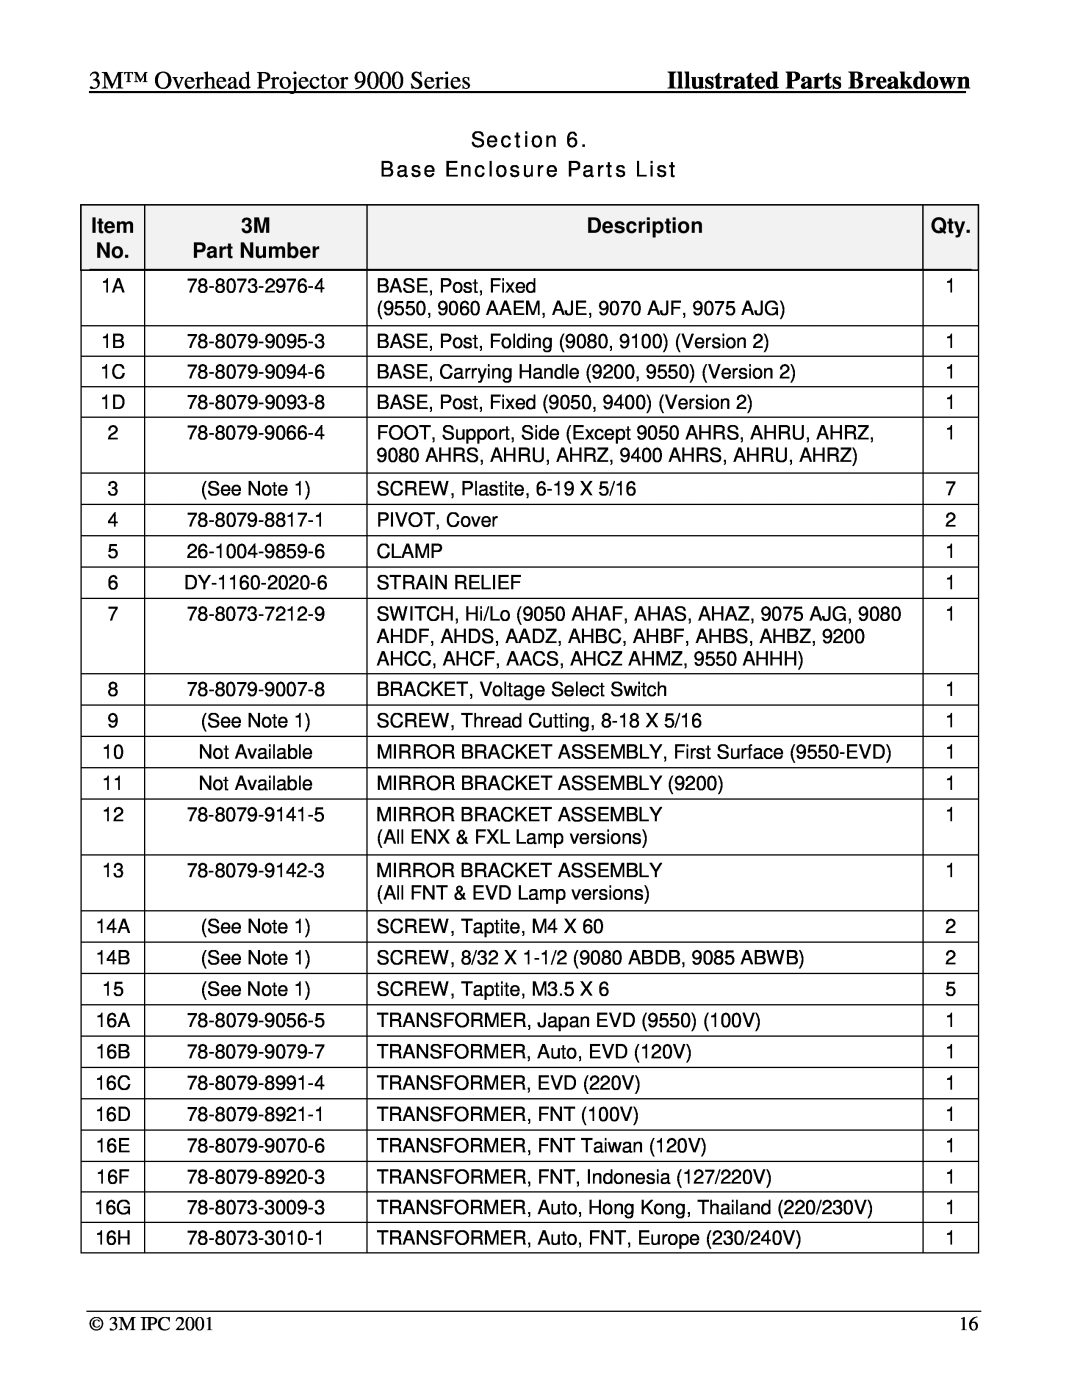 Xerox 9100 Section Base Enclosure Parts List, 3M Overhead Projector 9000 Series, Illustrated Parts Breakdown, Description 